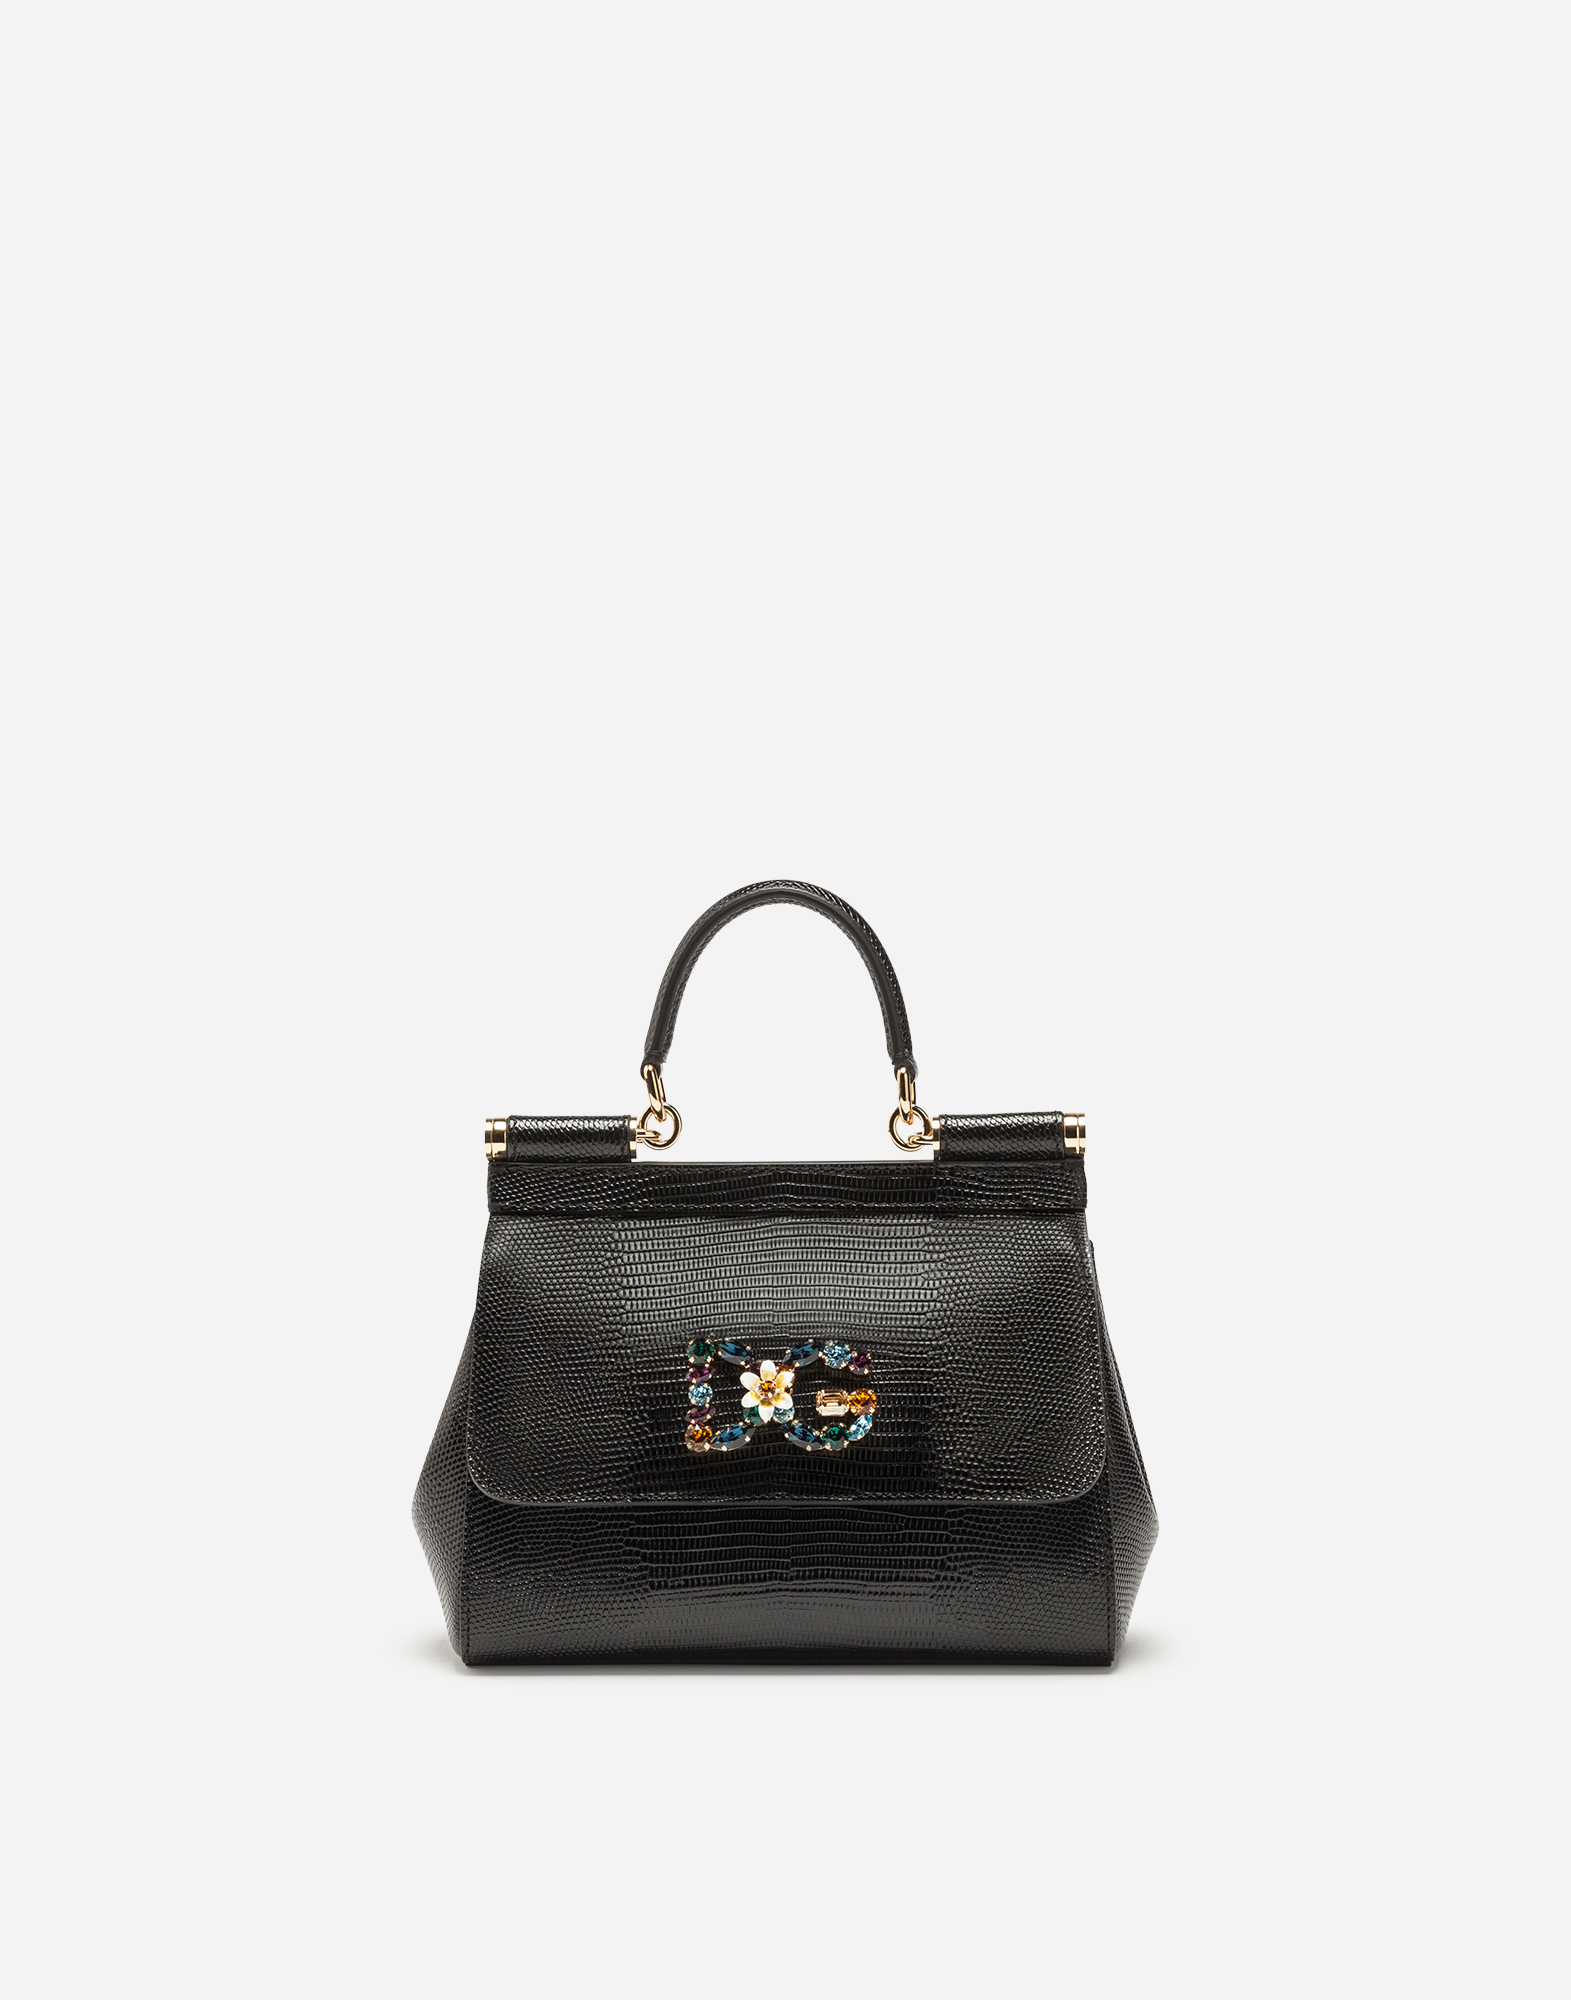 Small Sicily handbag in iguana print calfskin with DG logo crystals in Black